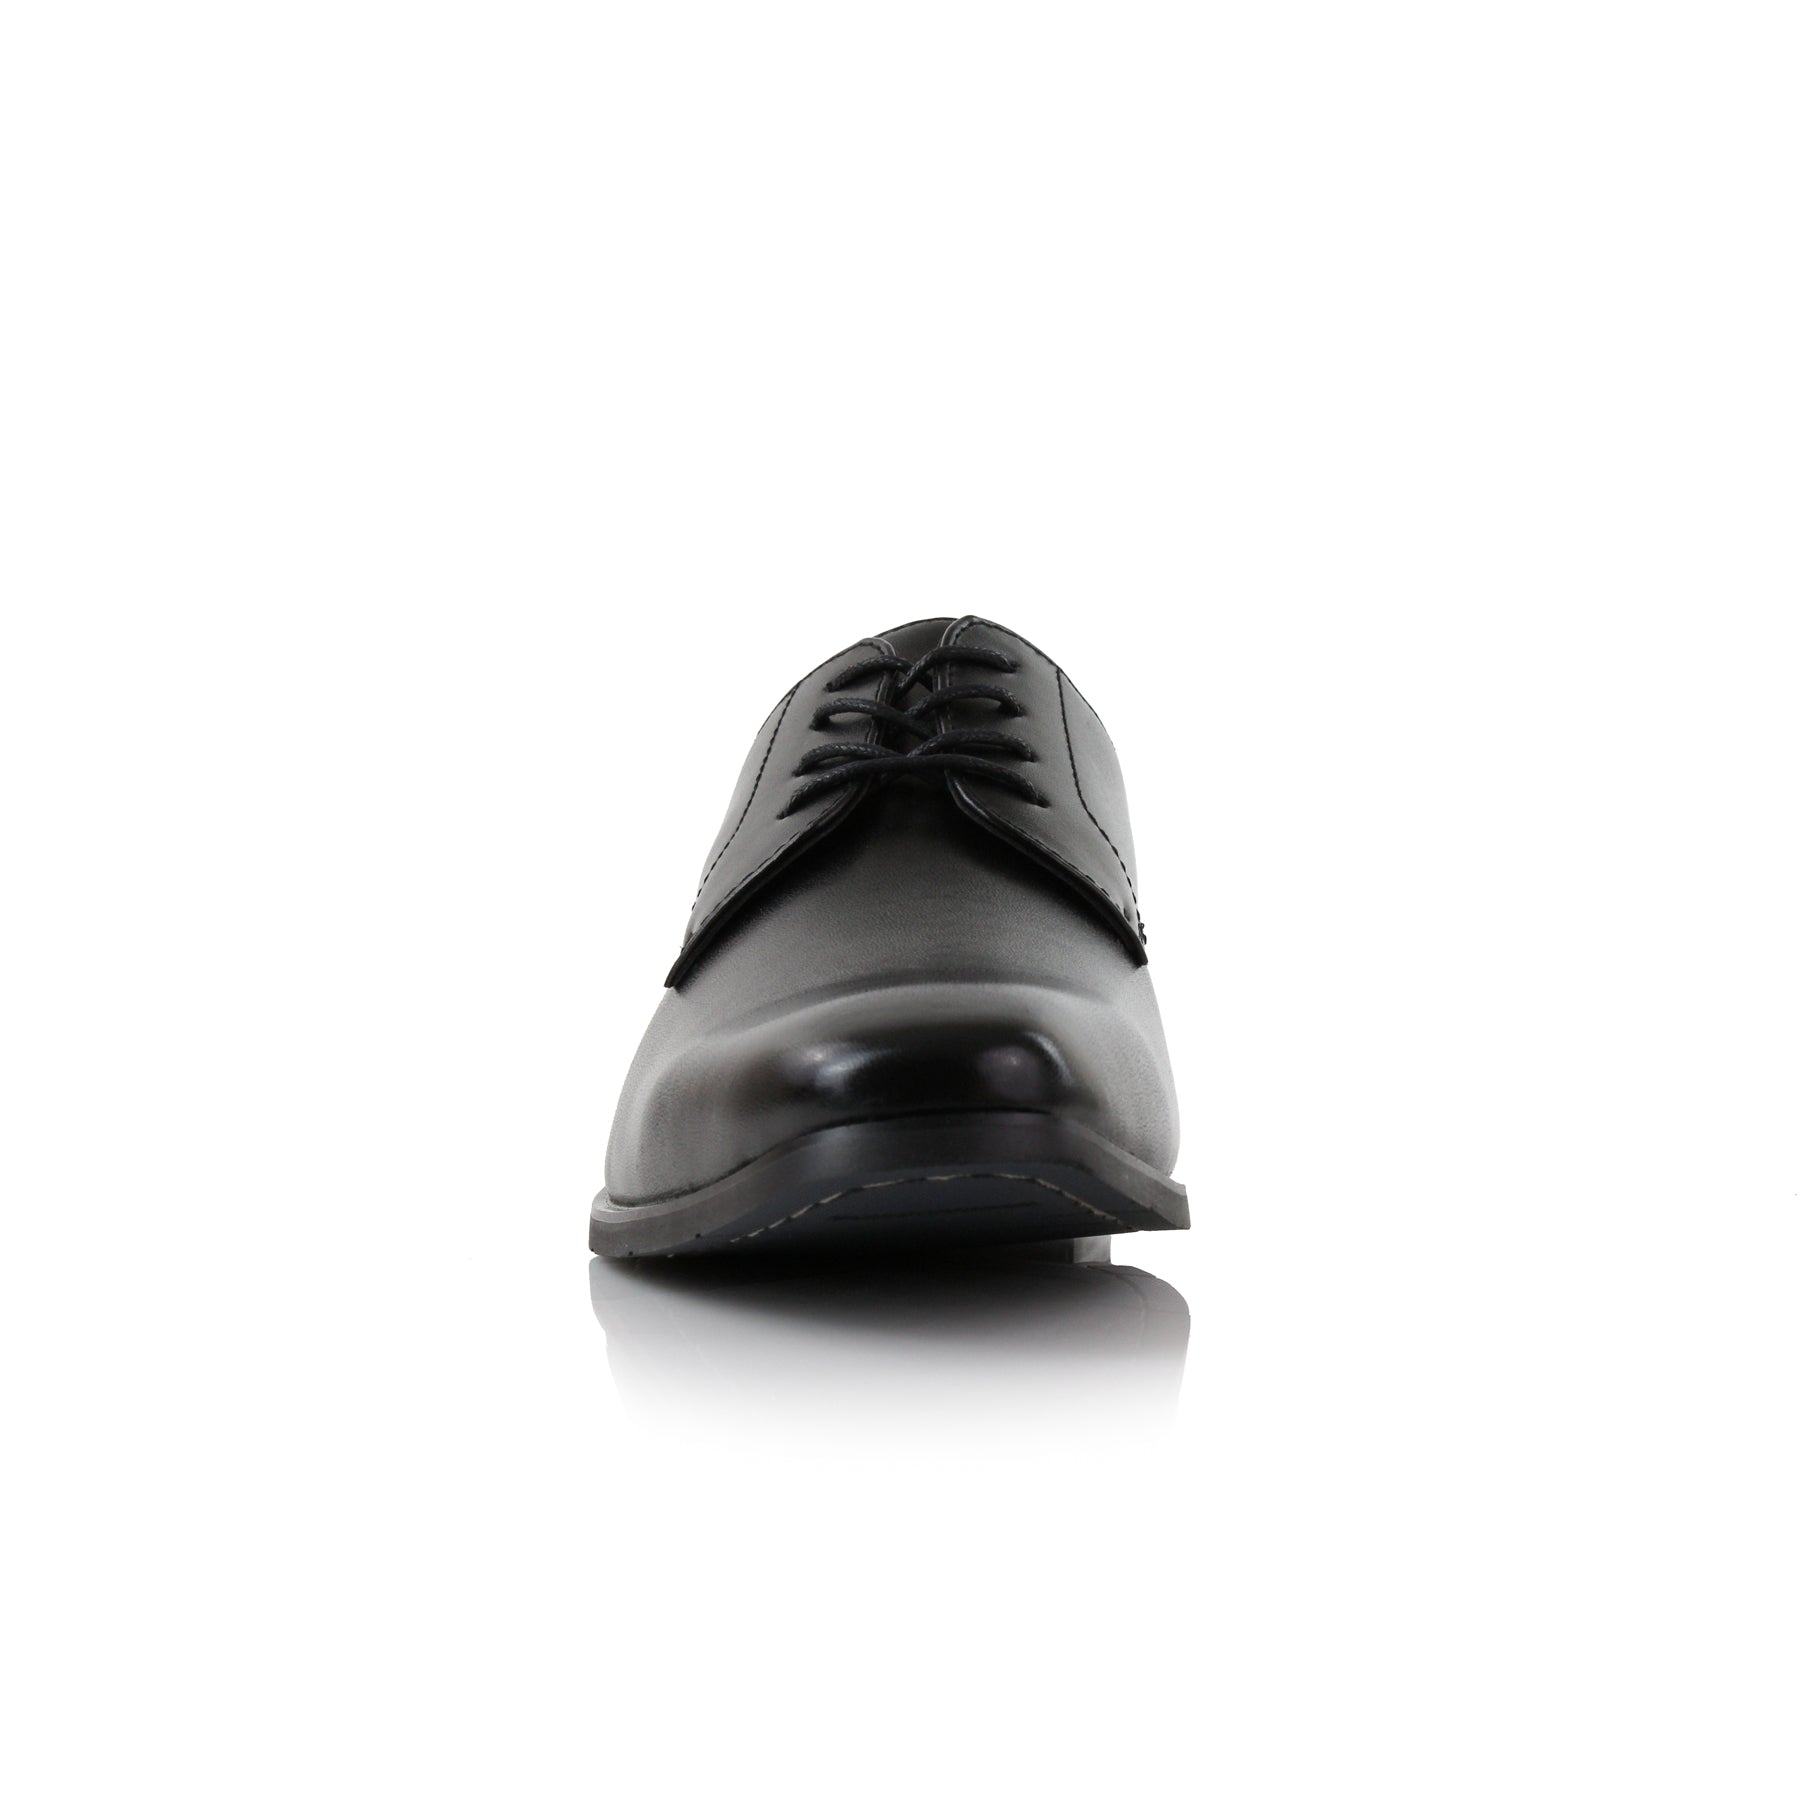 Plain Toe Derby Shoes | Alvin by Ferro Aldo | Conal Footwear | Front Angle View